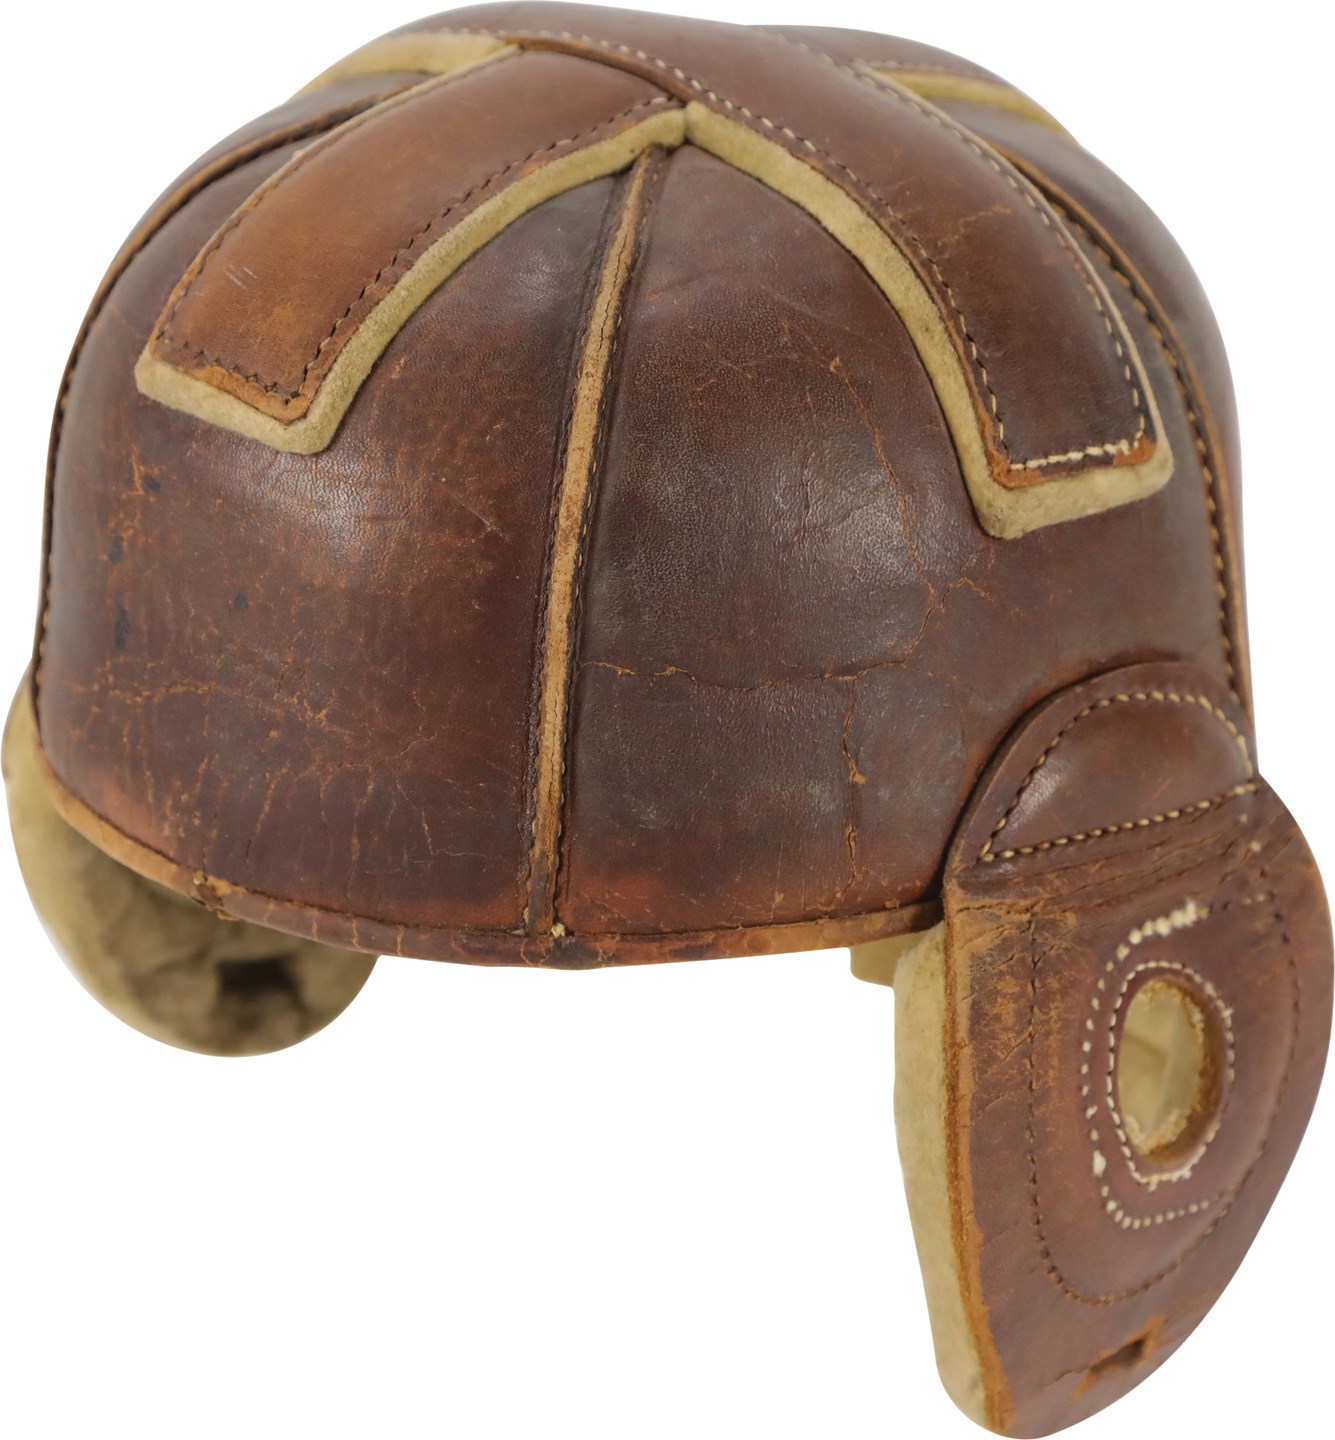 Football - 1920s Draper & Maynard Leather Helmet w/Crossed Strips on Top